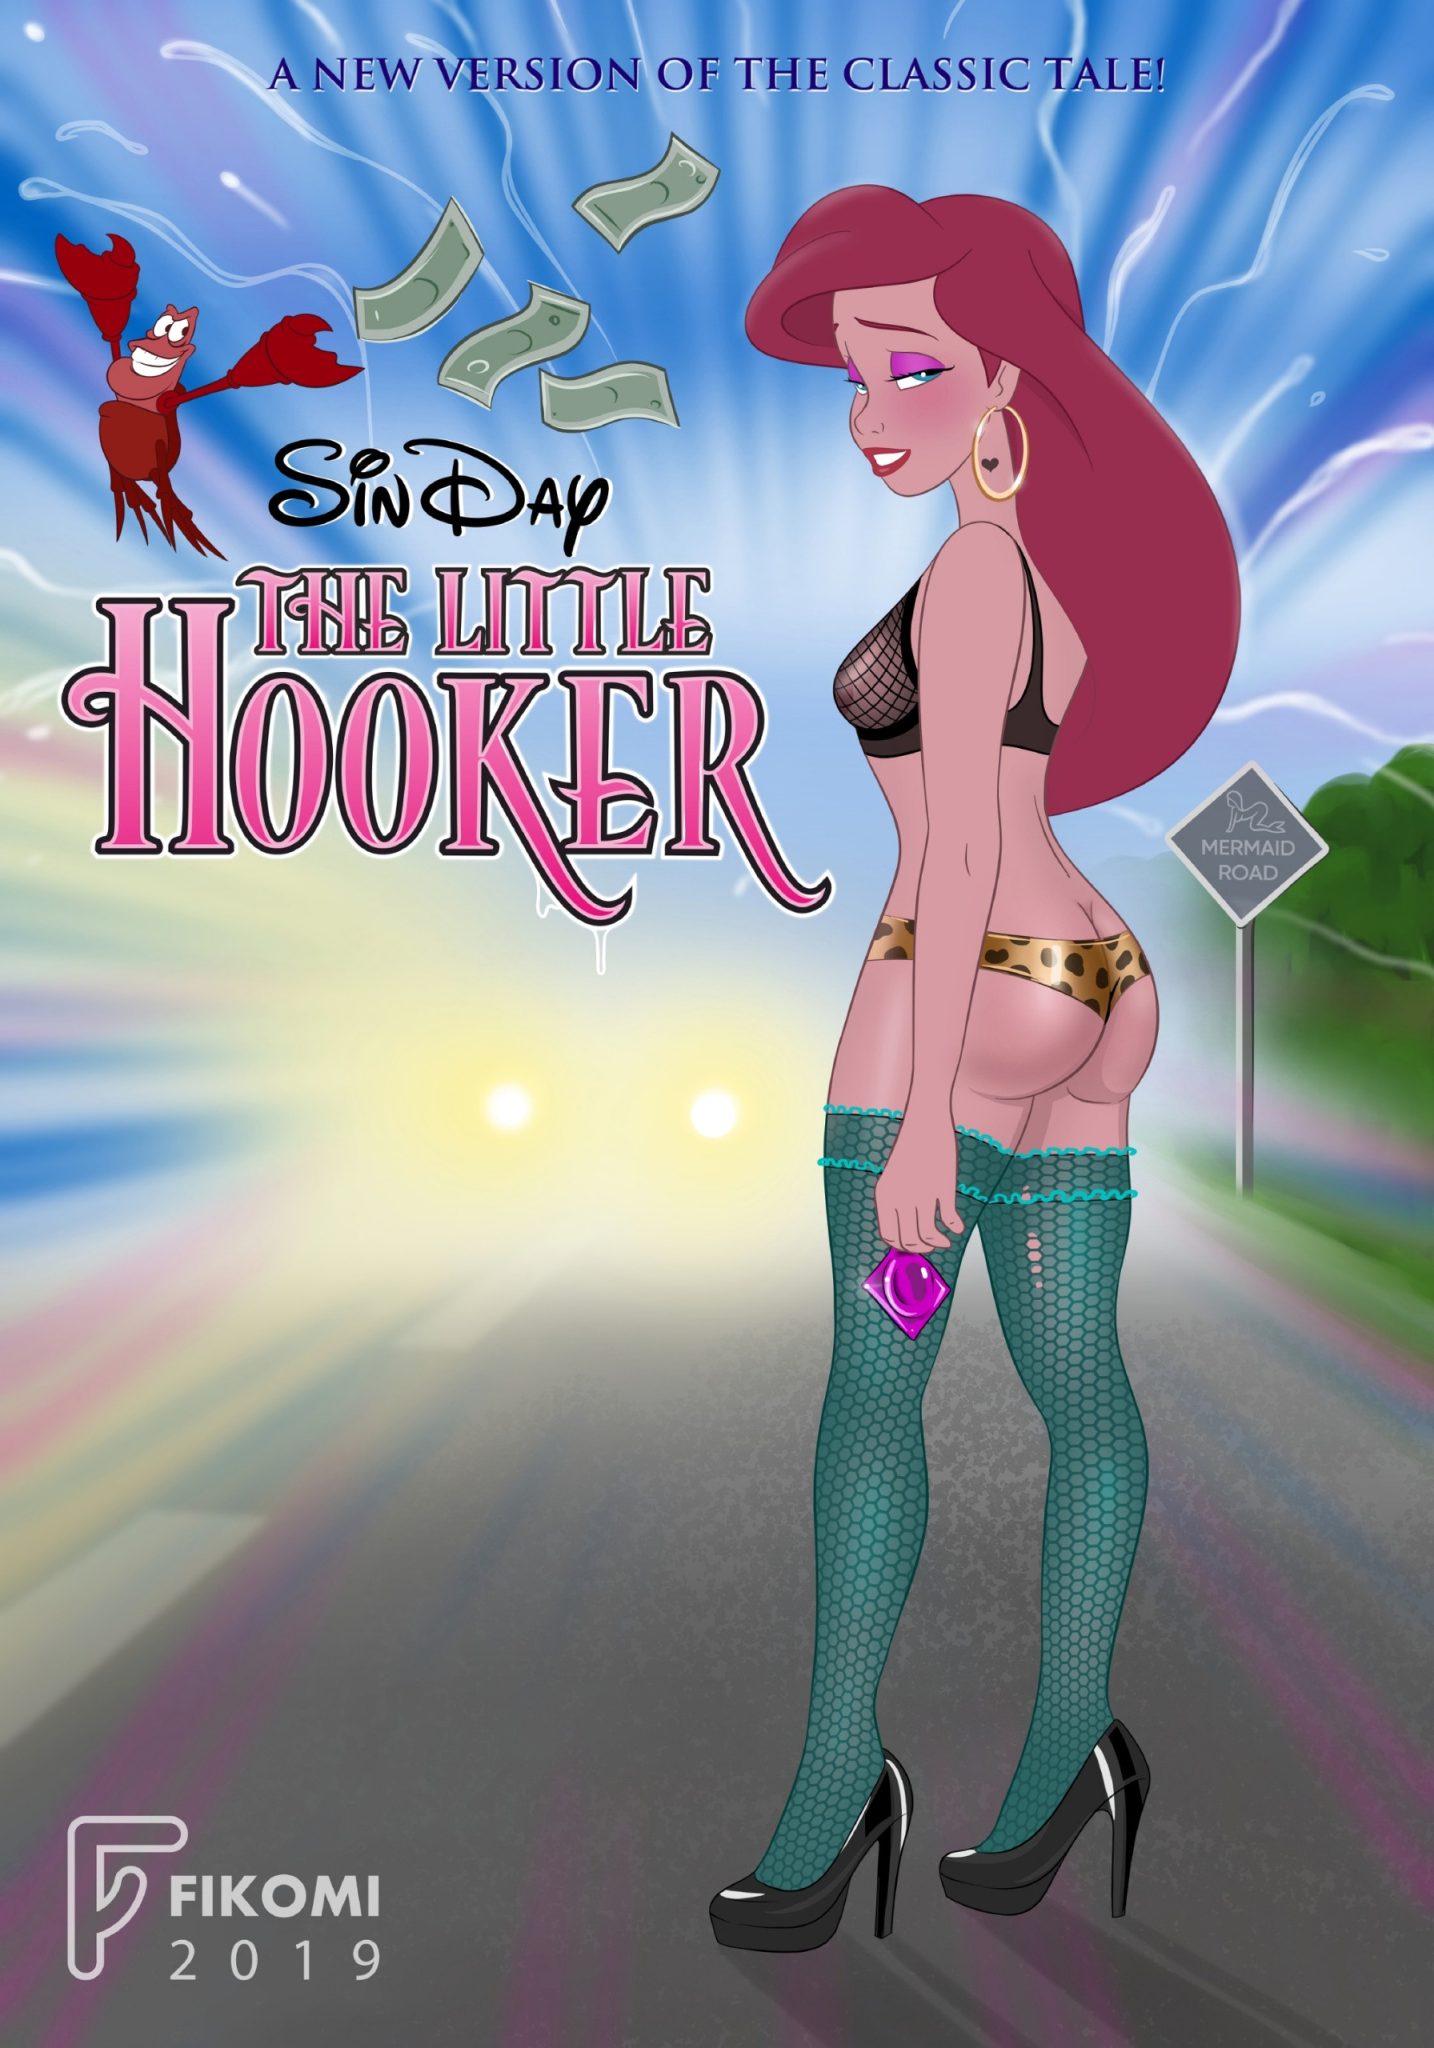 The Little Hooker